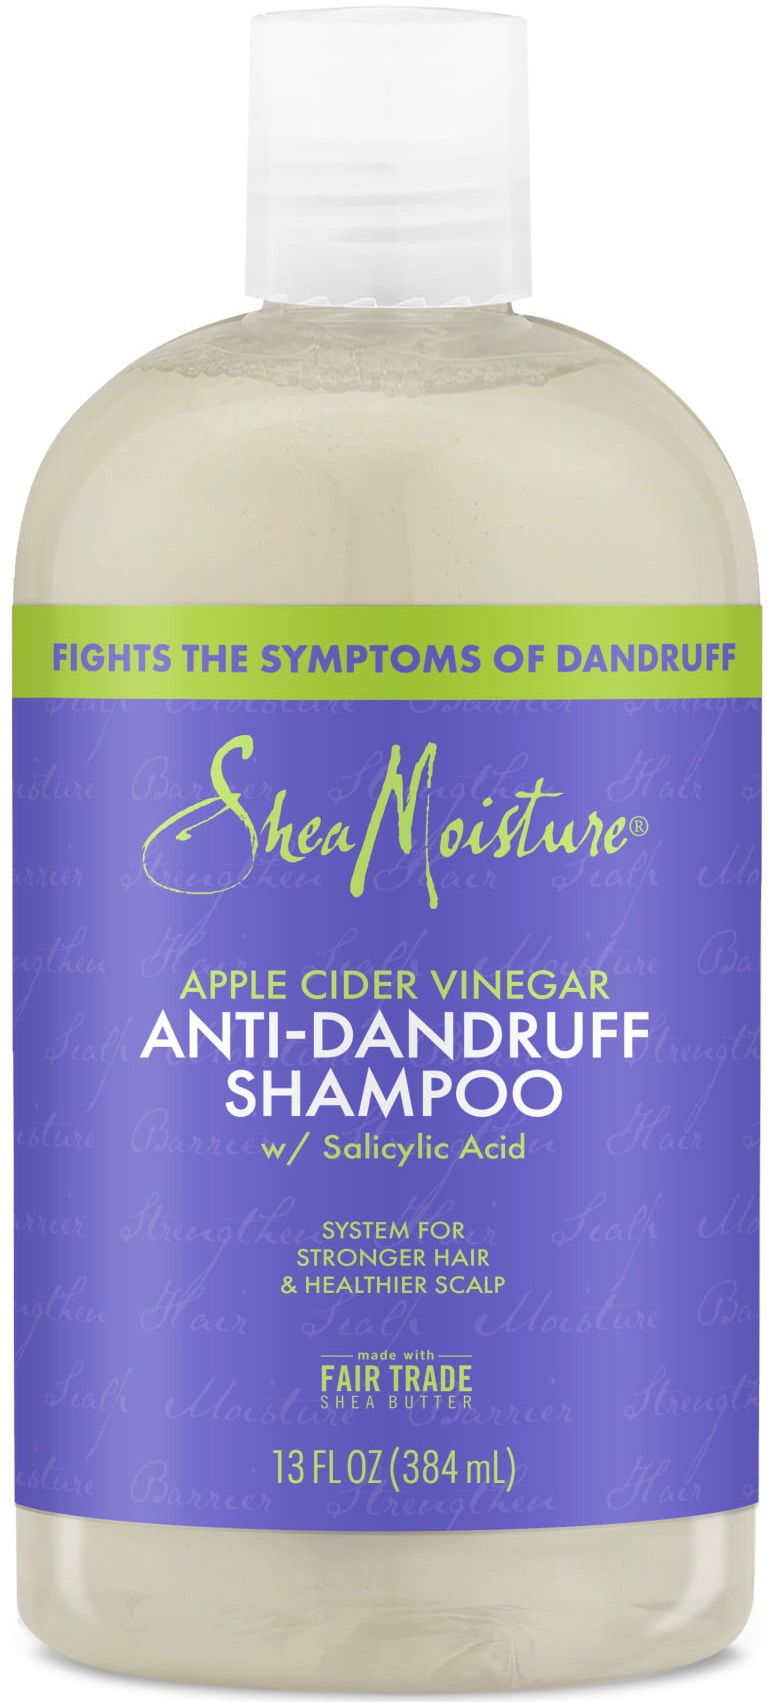 Shea Moisture Apple Cider Vinegar Anti-dandruff Shampoo